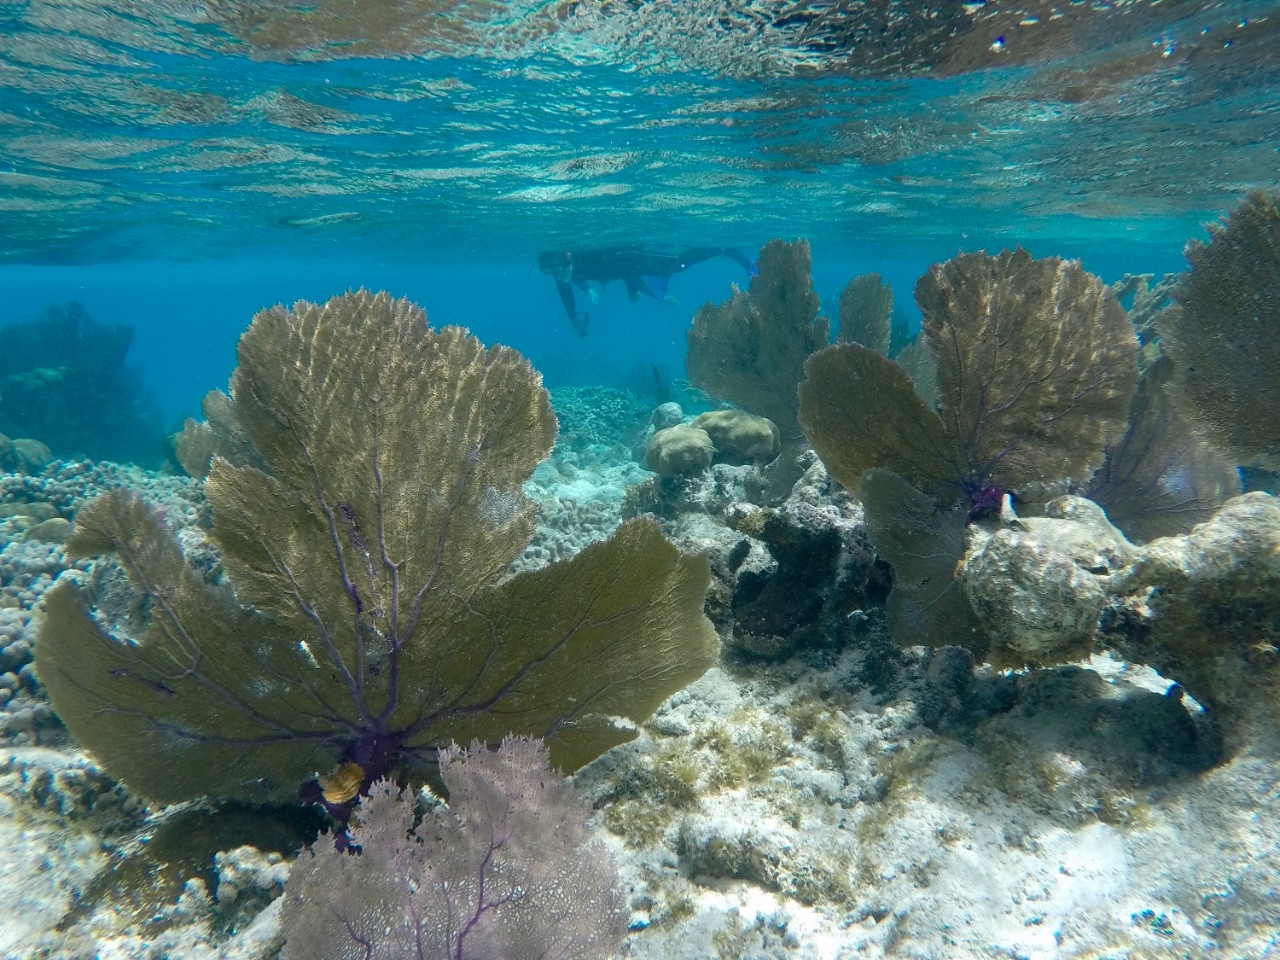 Underwater photo of coral reefs